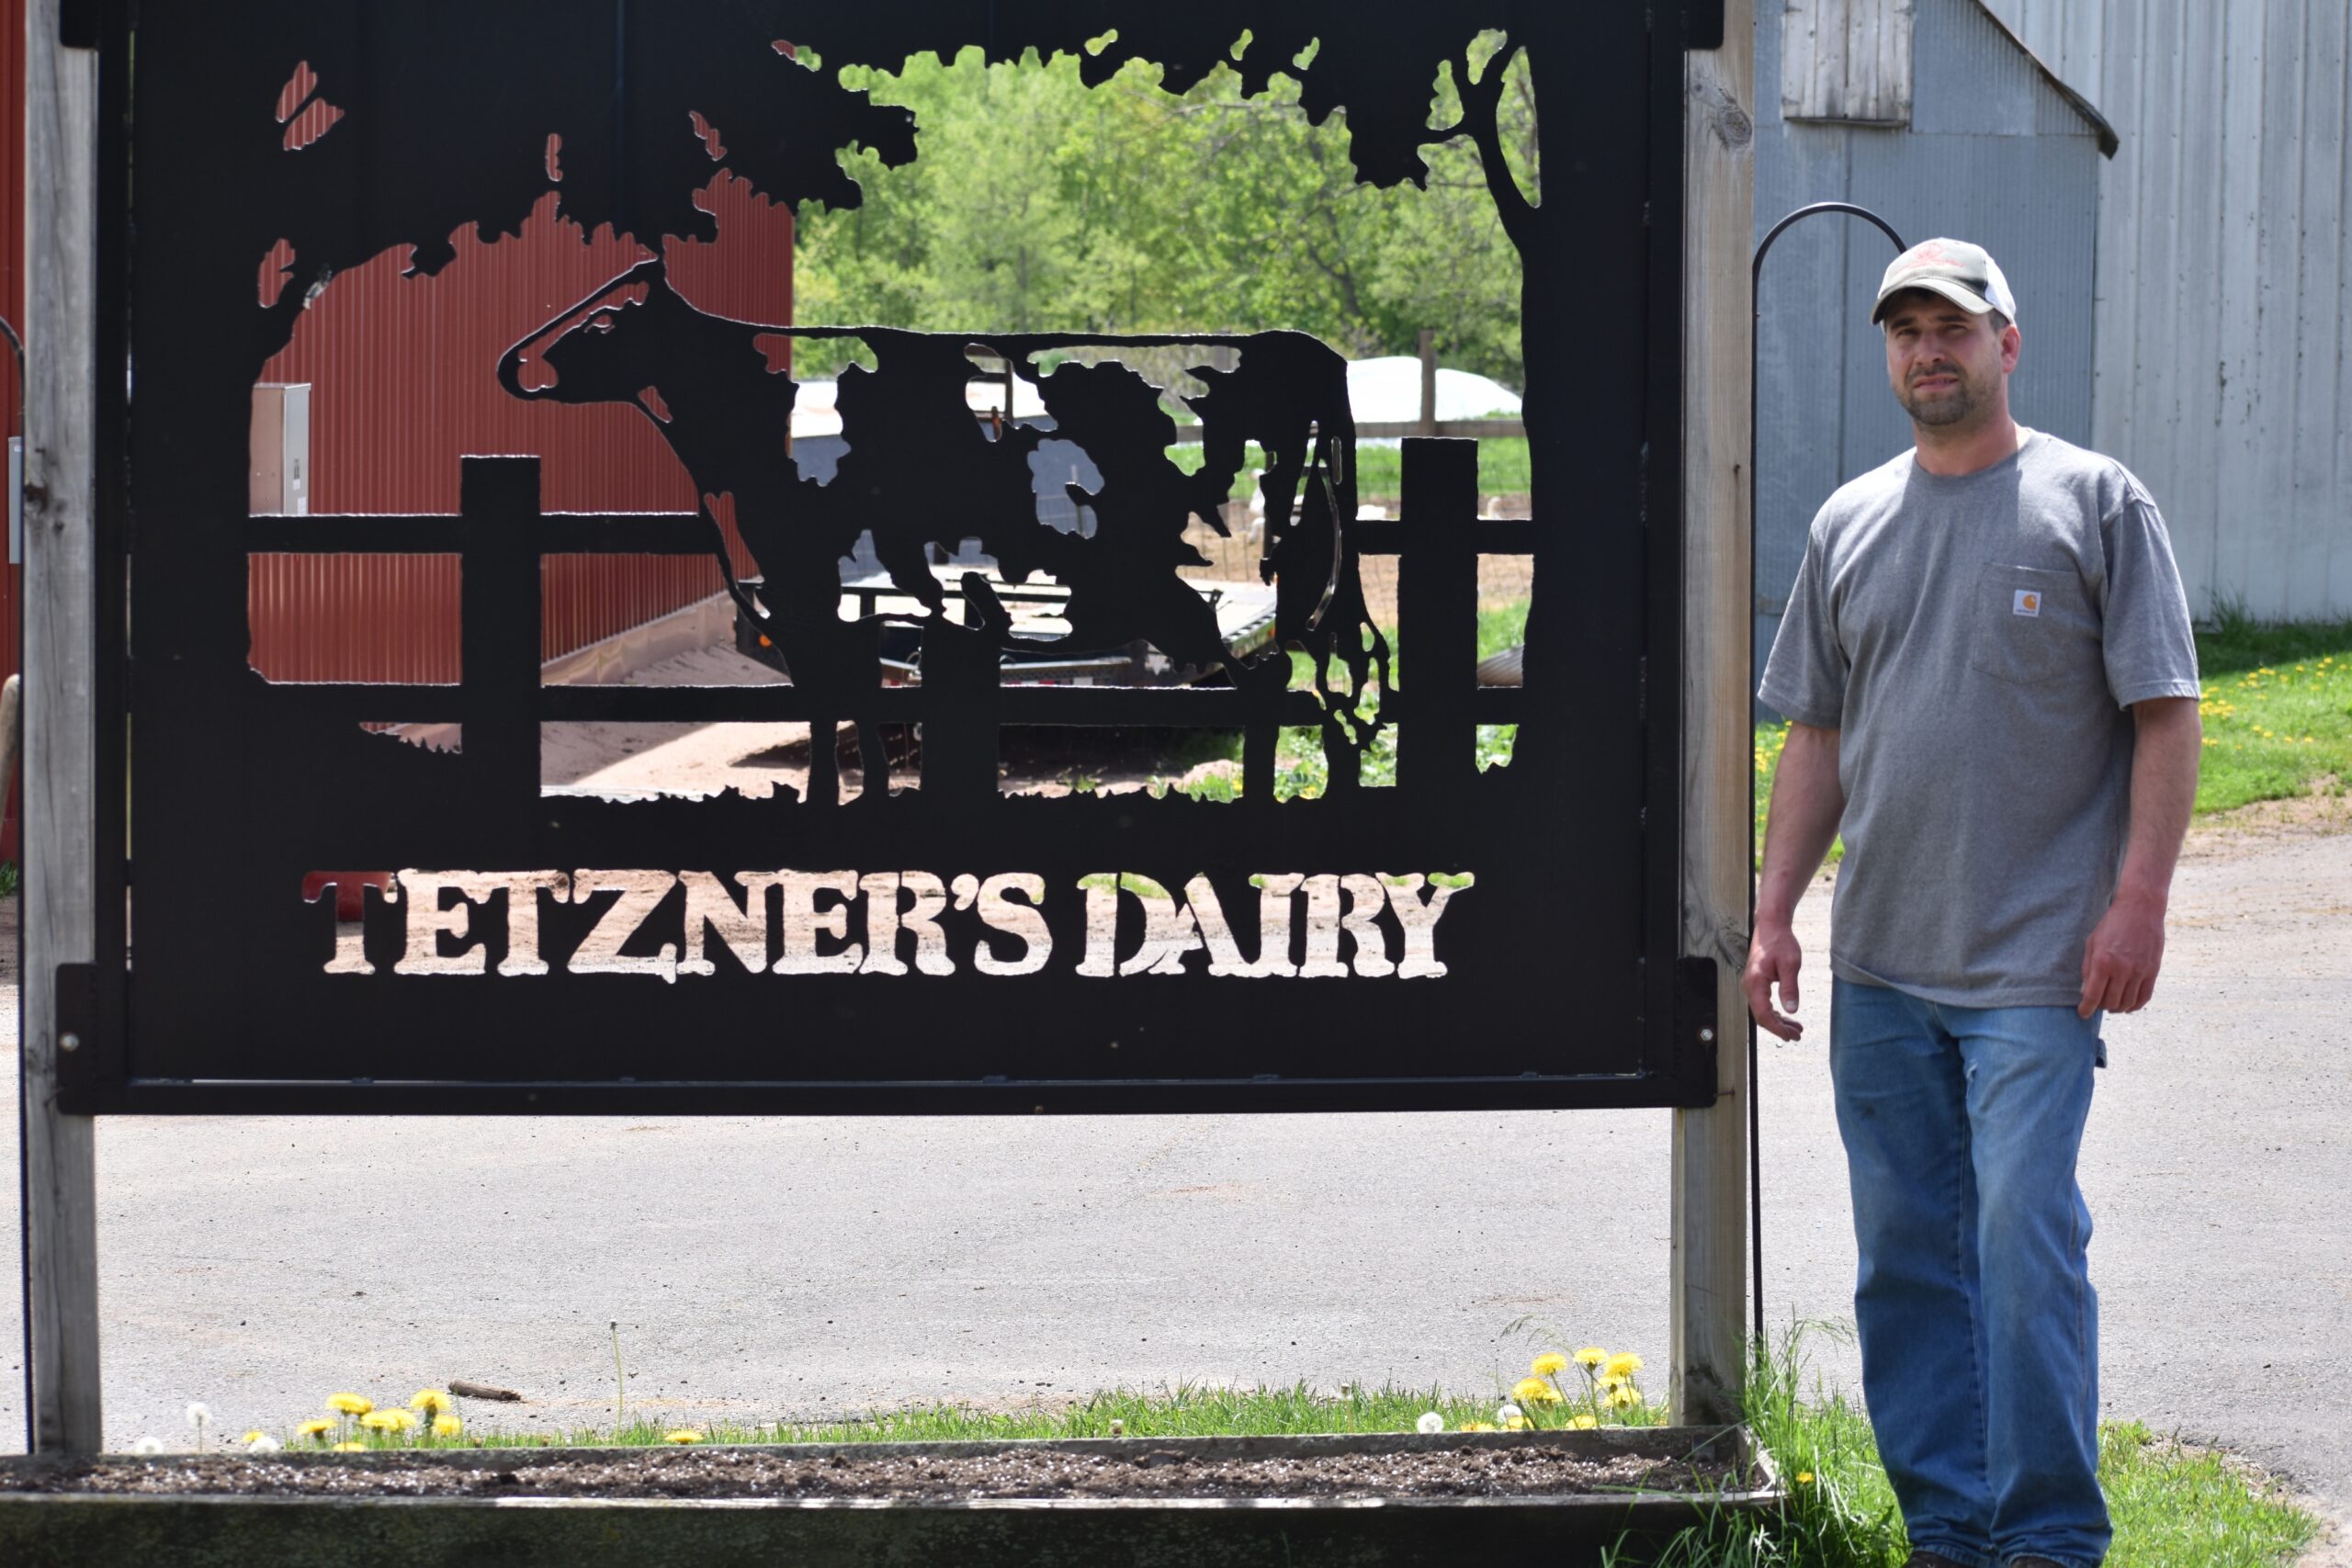 Pete Tetzner with Tetzner's Dairy helps provide milk to area food pantries